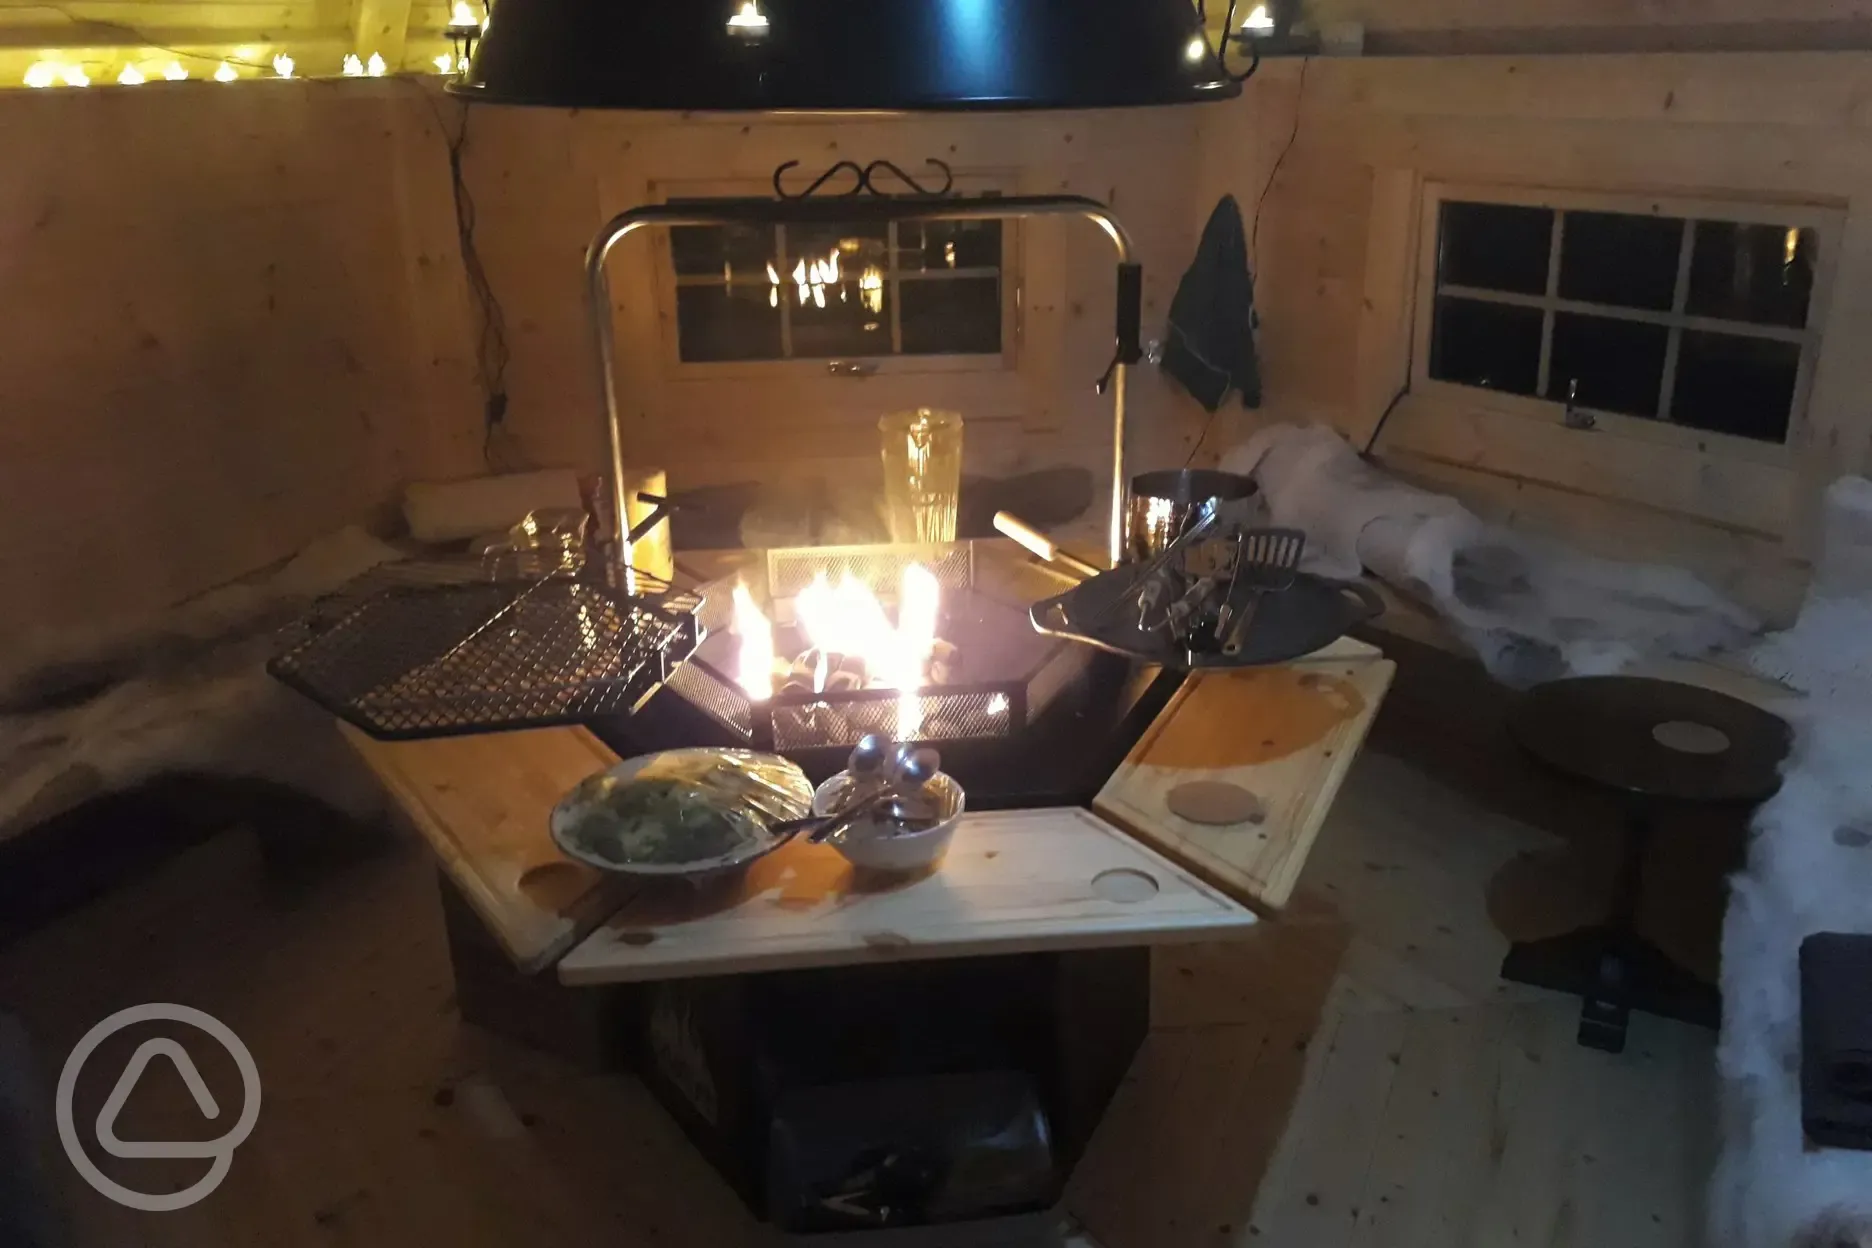 Inside the barbecue cabin